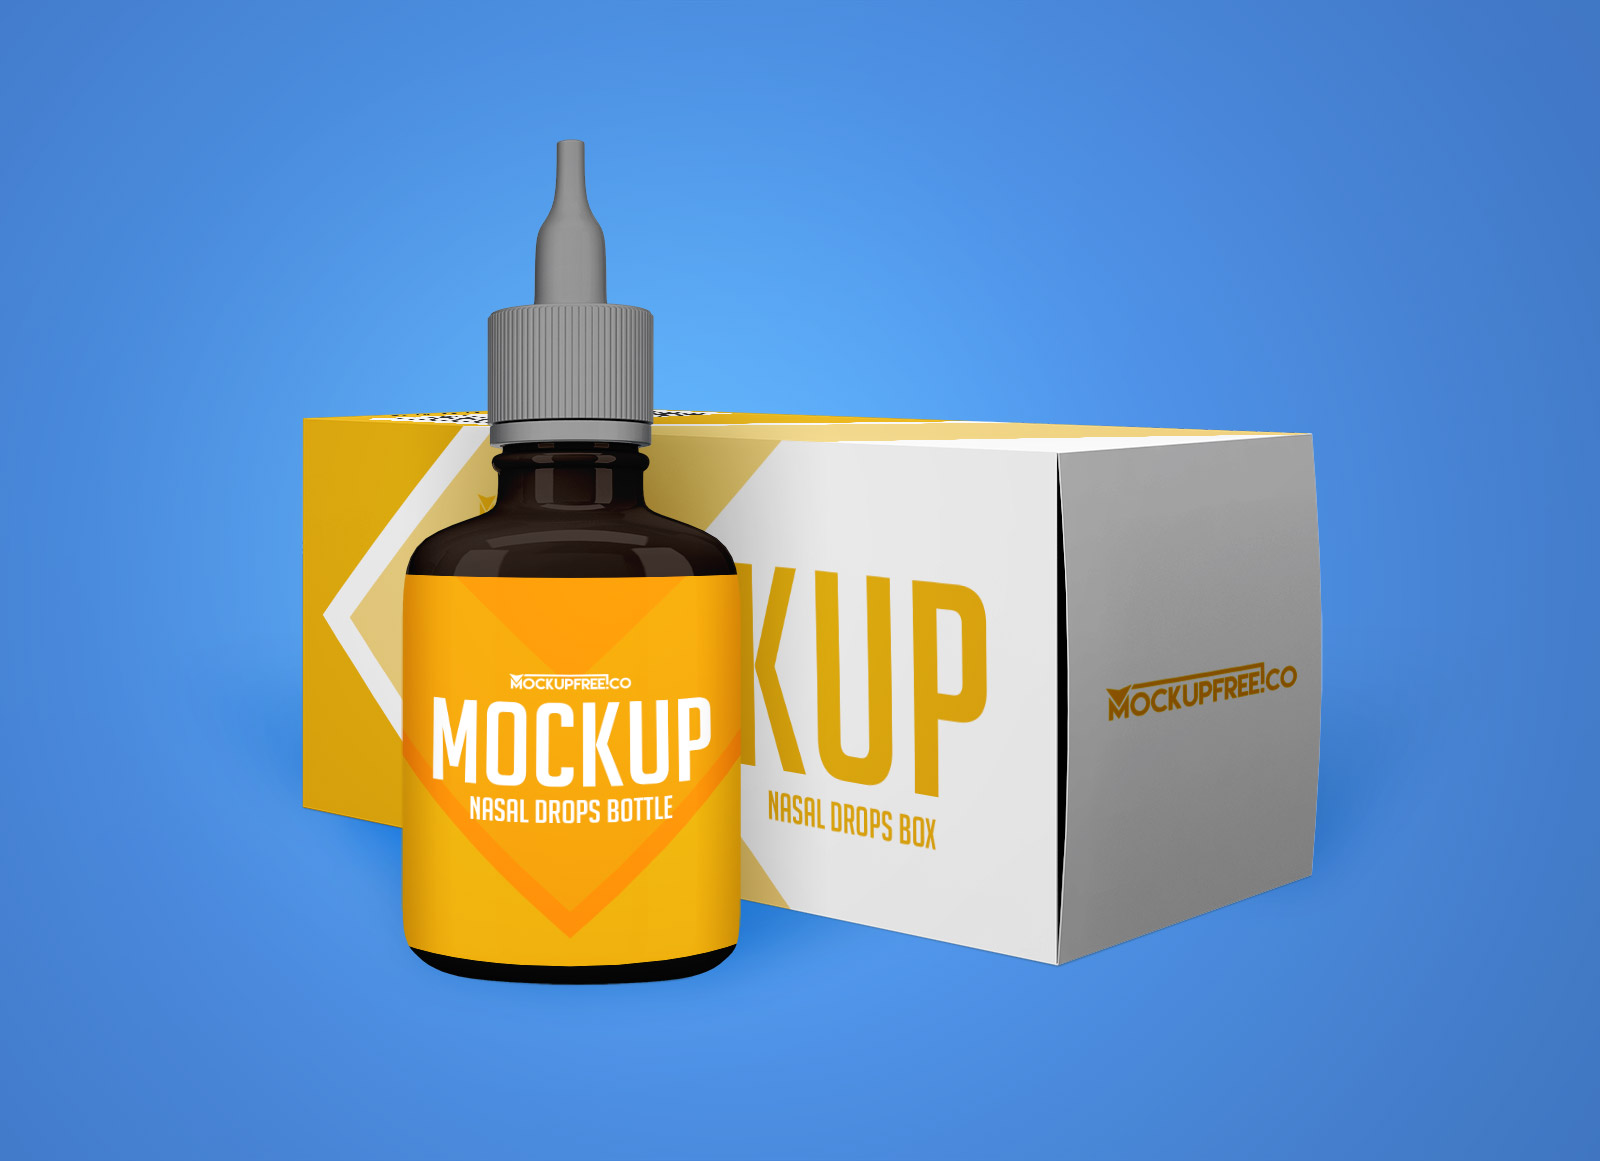 Free-Nasal-Drops-Bottle-&-Packaging-Mockup-PSD-2